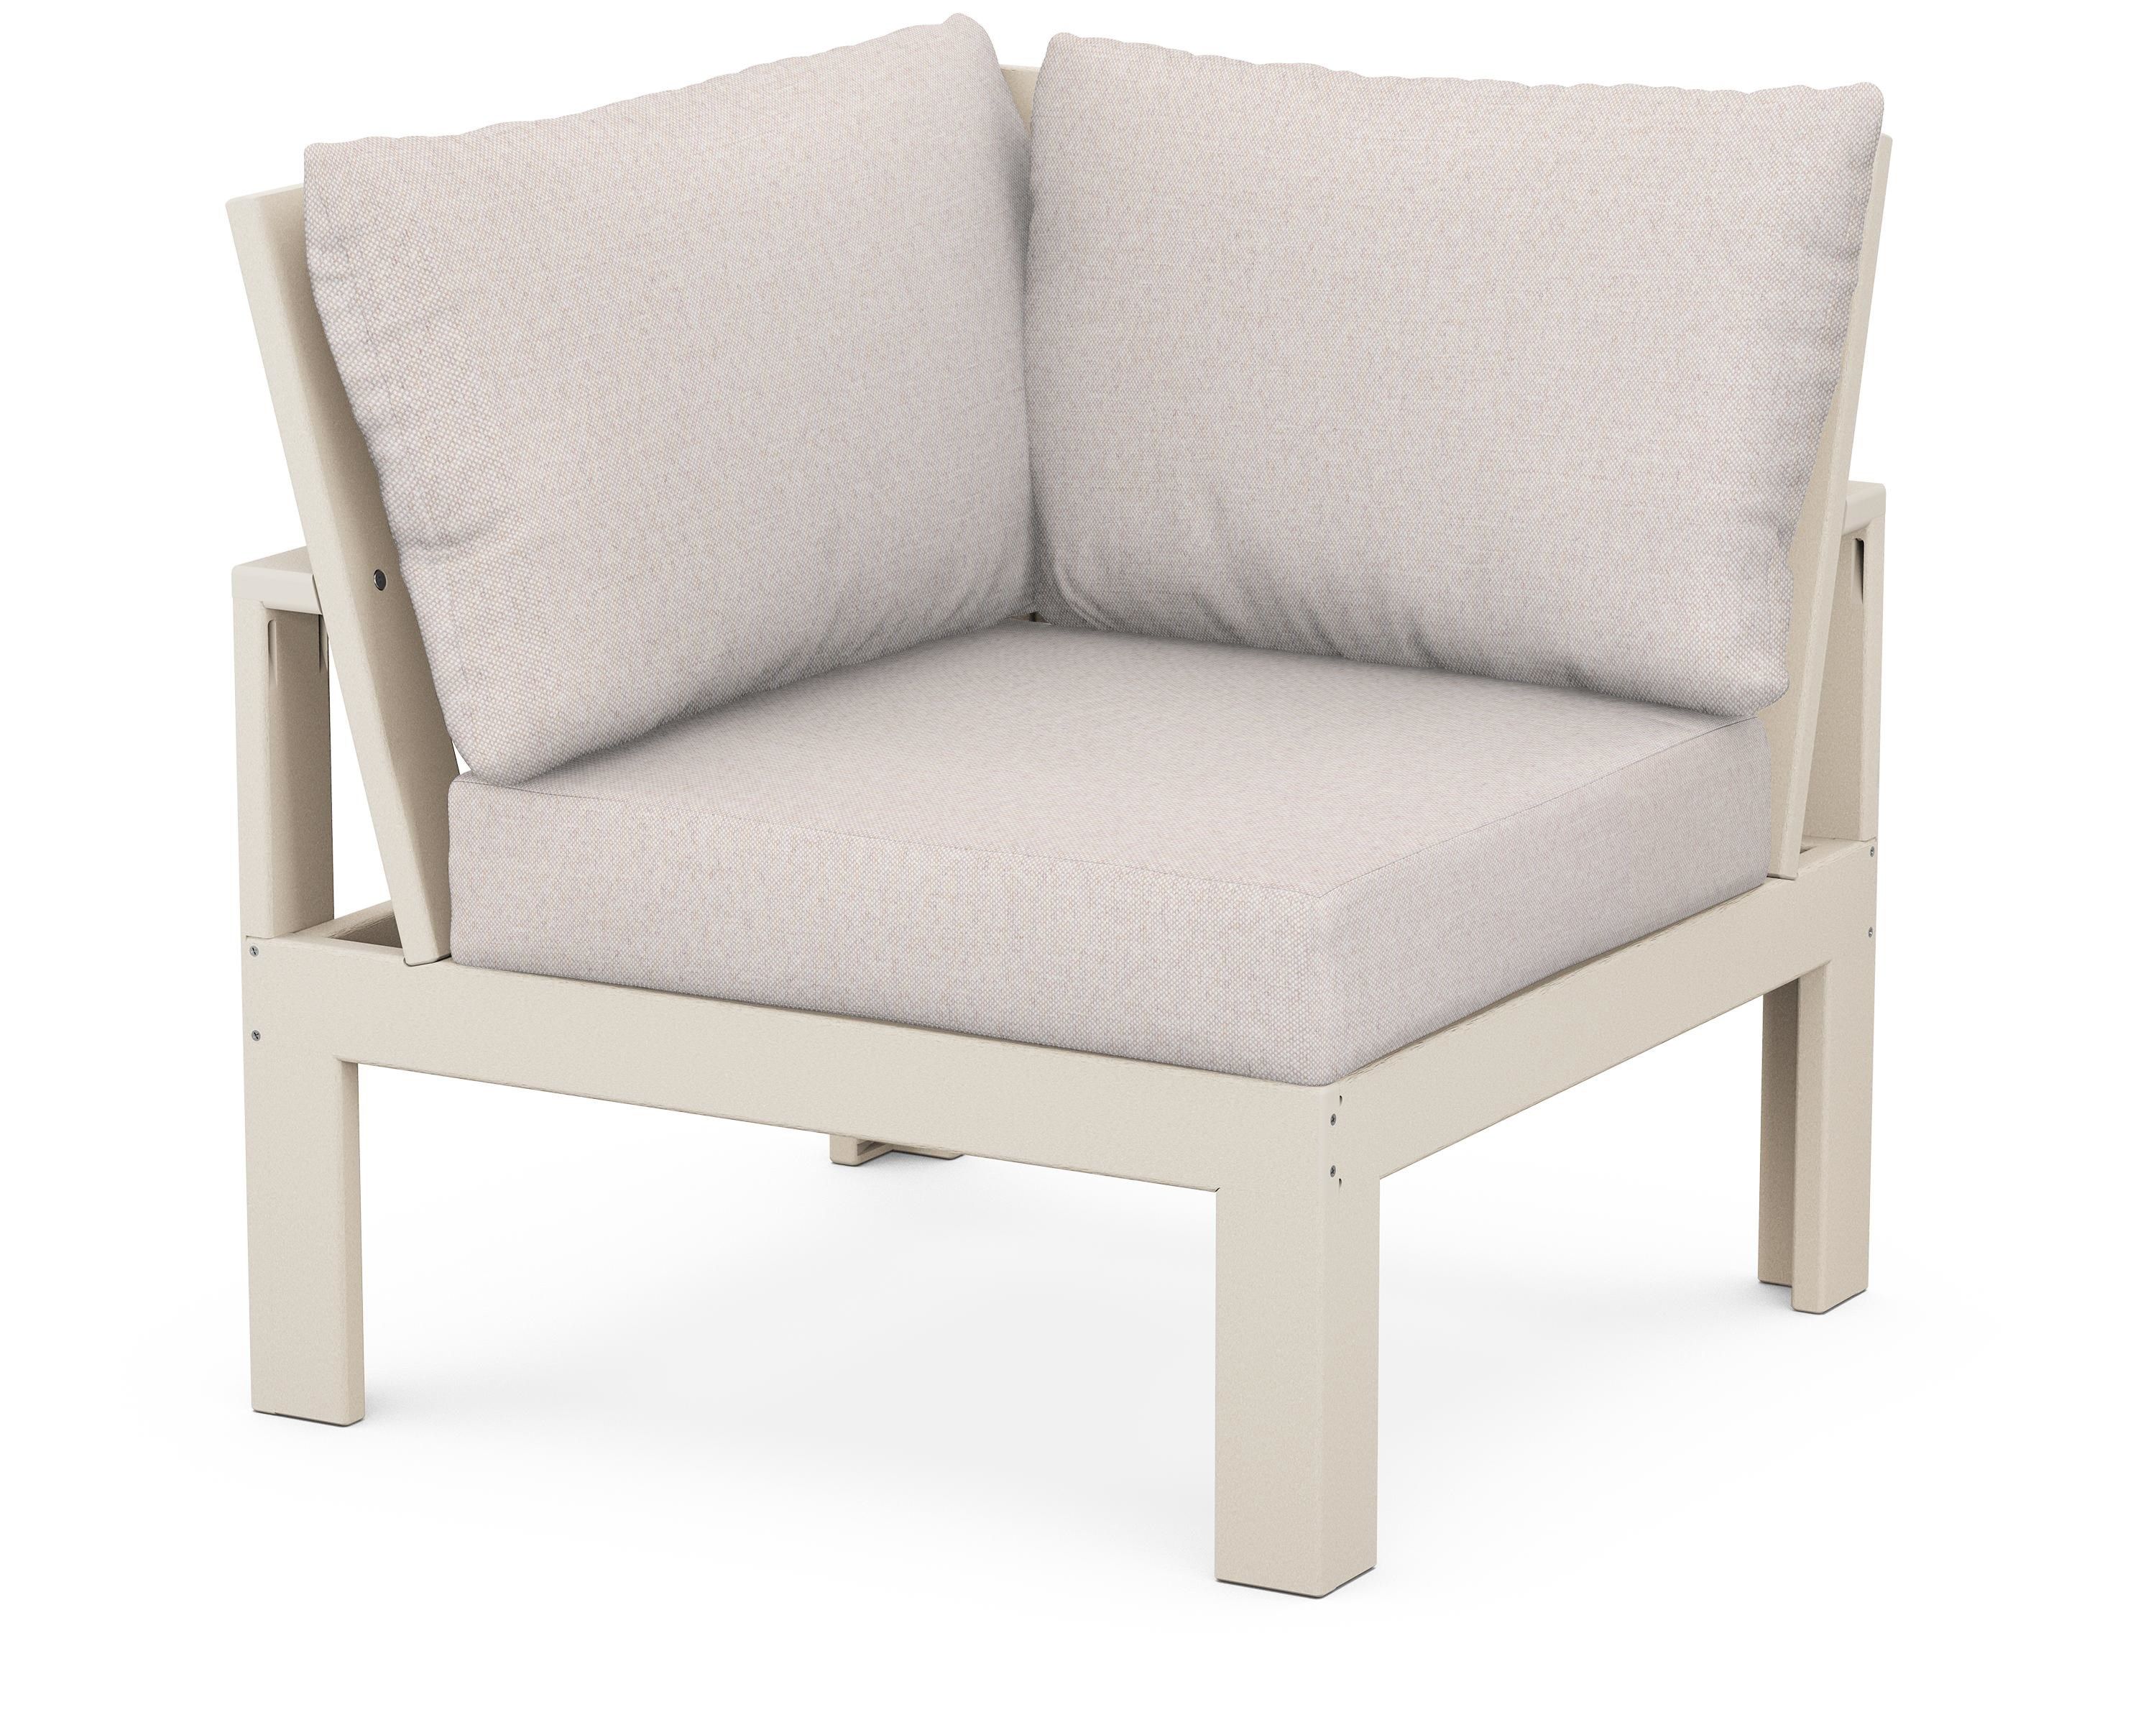 Trex Outdoor Furniture Modular Corner Chair